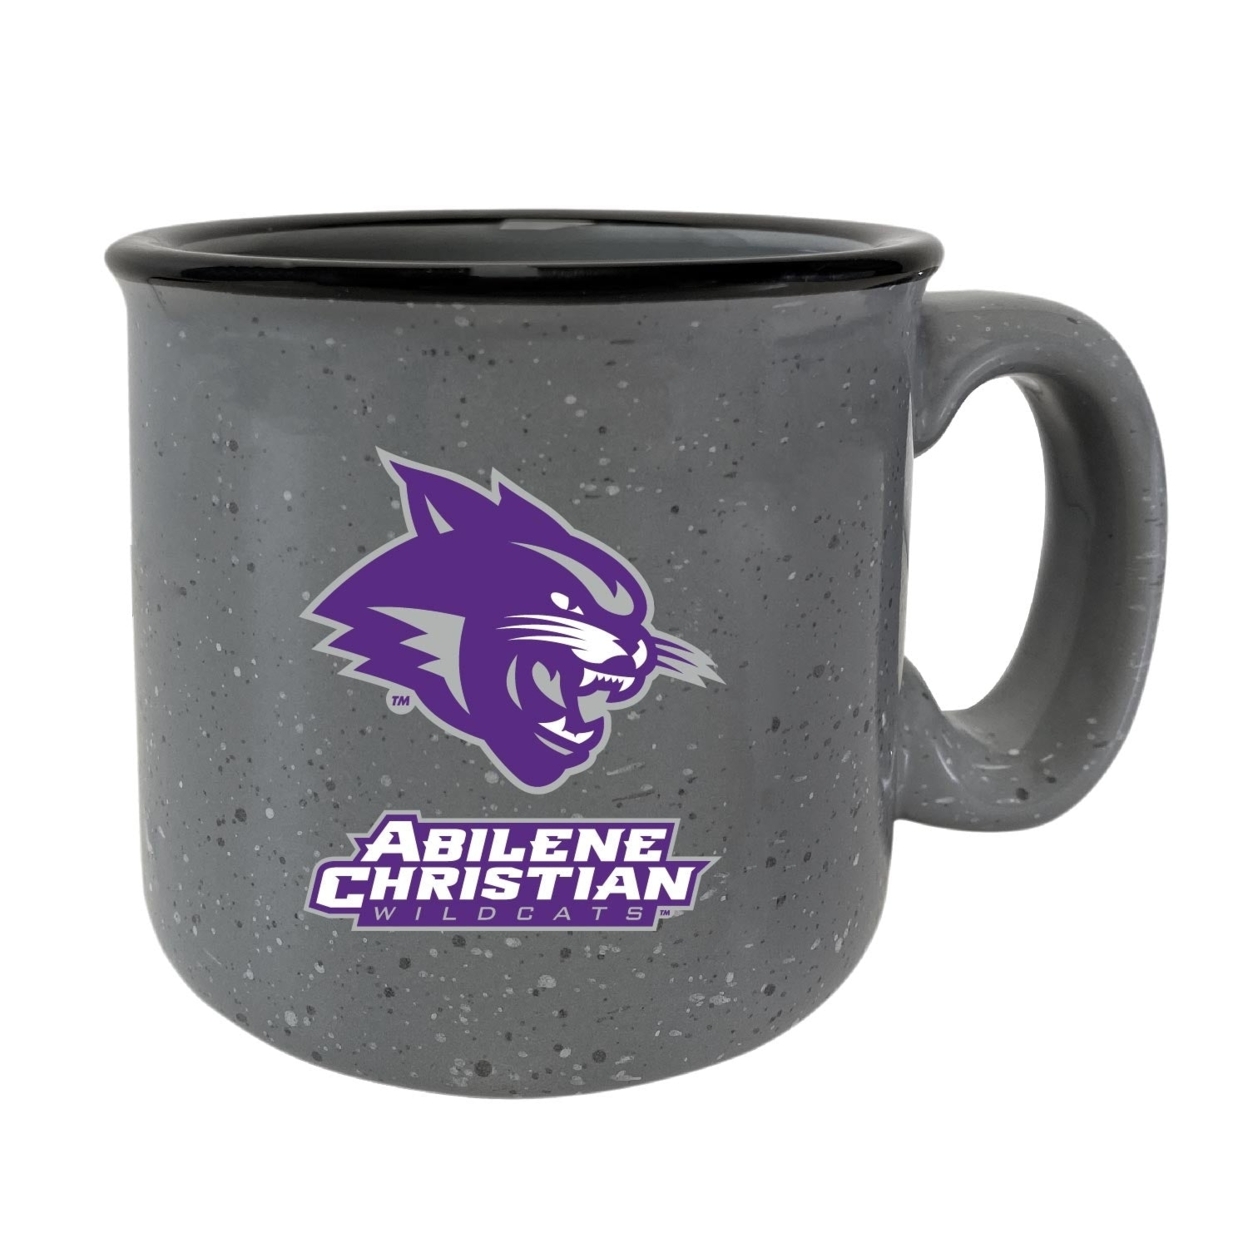 Abilene Christian University Speckled Ceramic Camper Coffee Mug - Choose Your Color - Navy